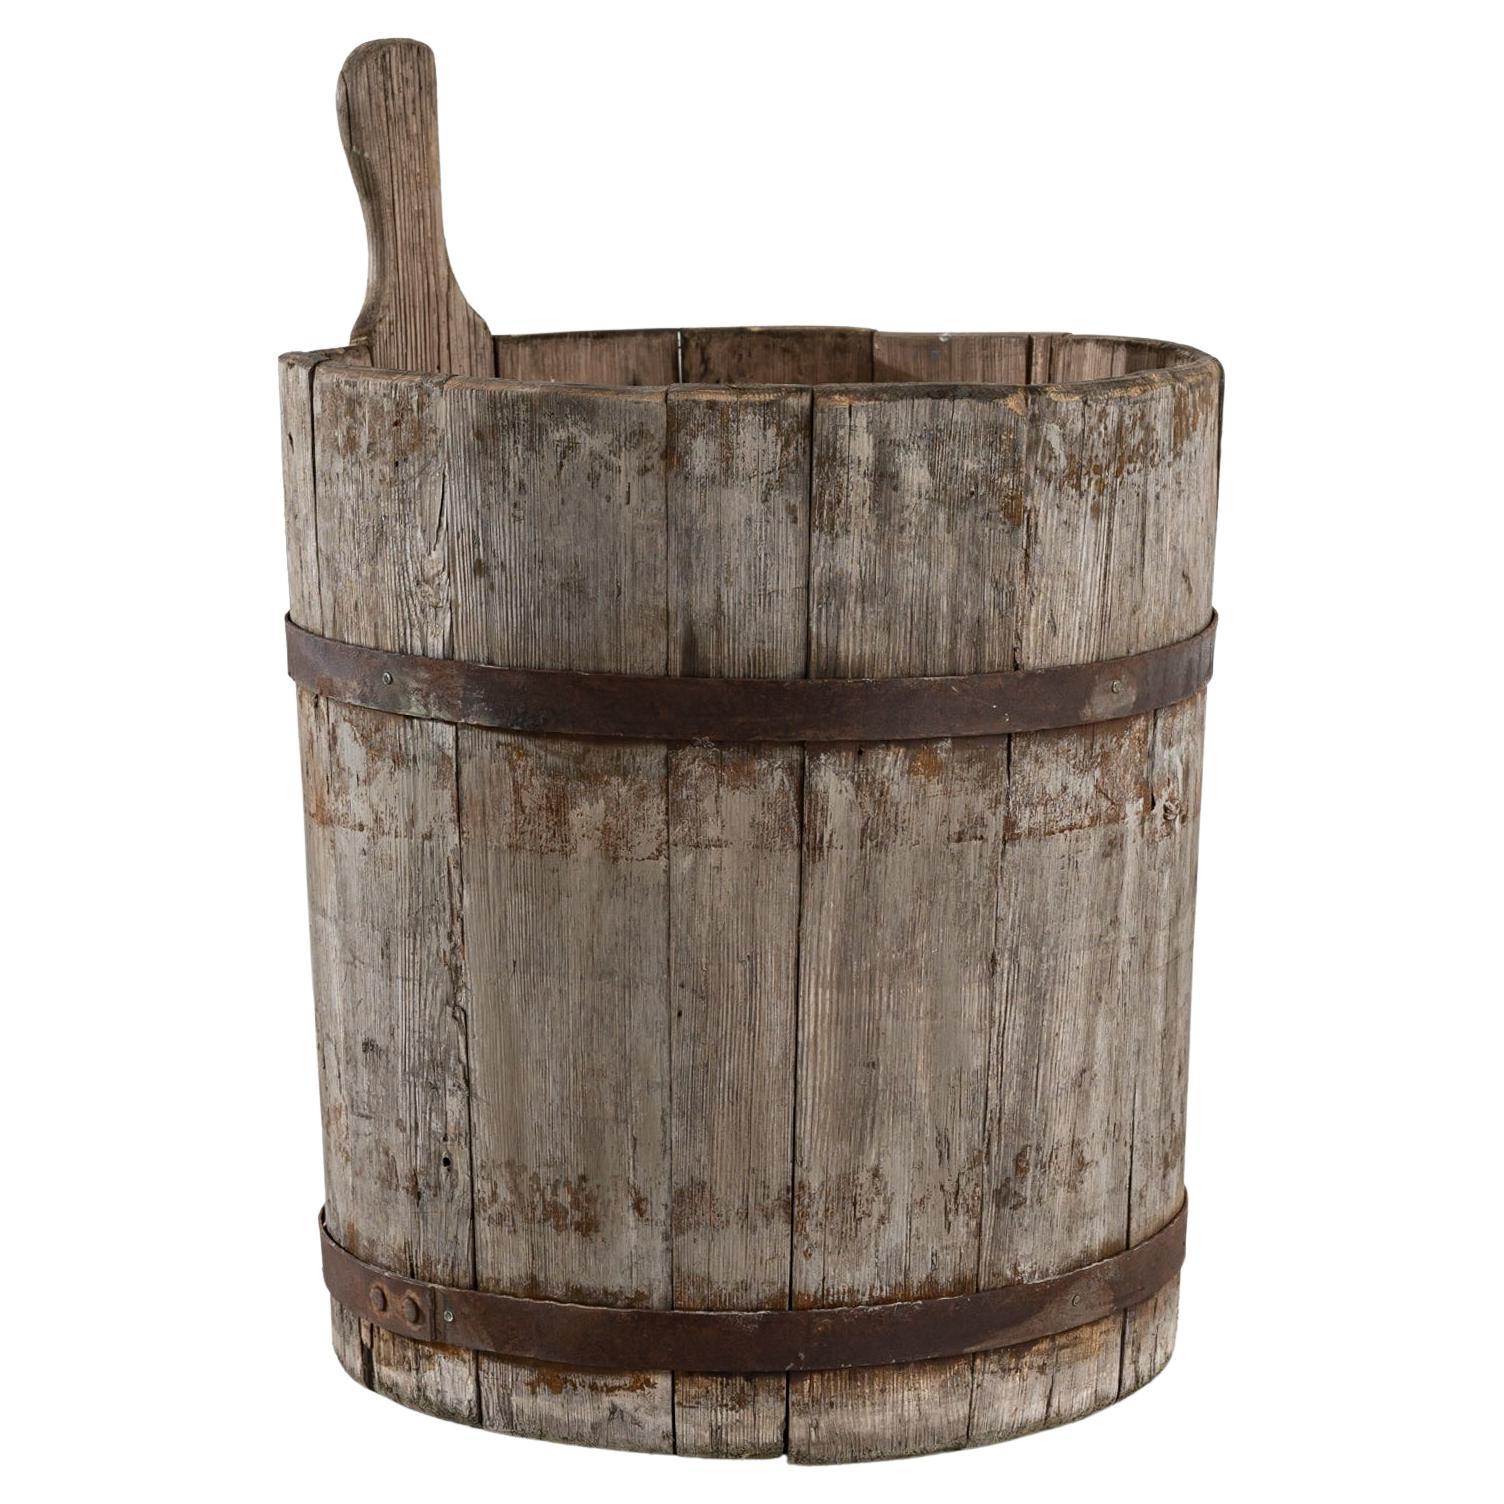 19th Century European Wooden Bucket For Sale